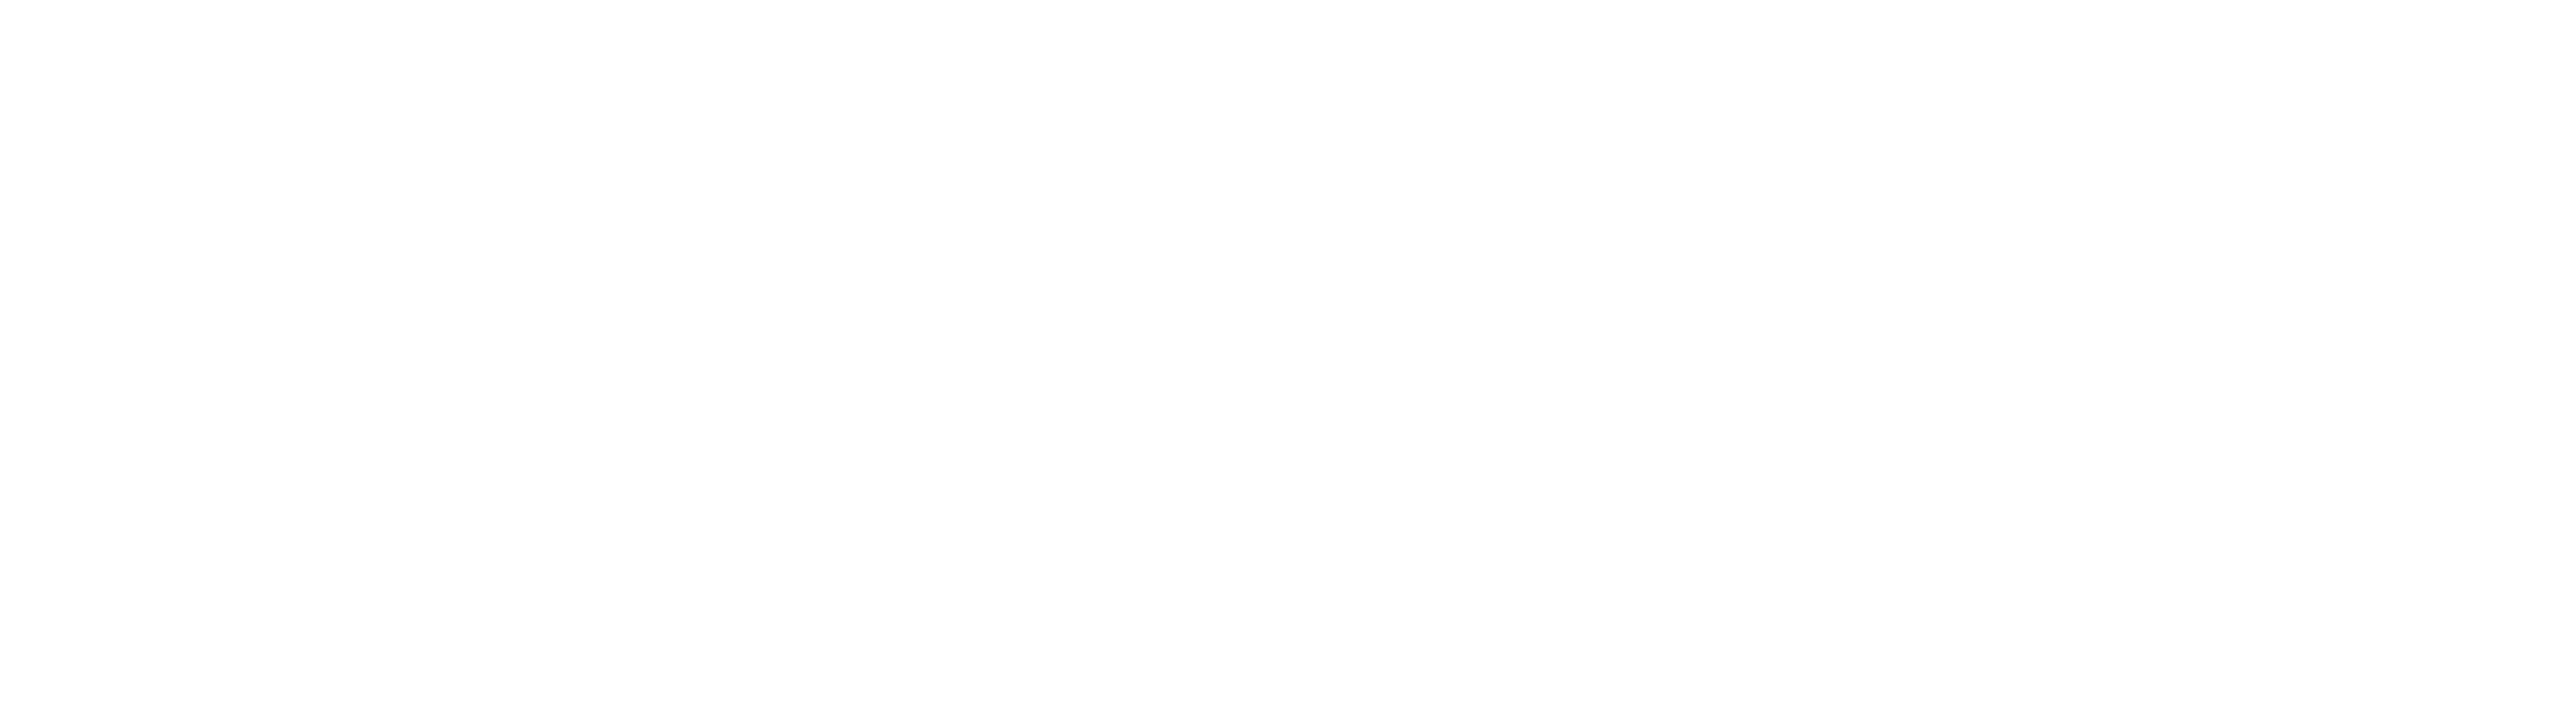 Raspberry pi logo